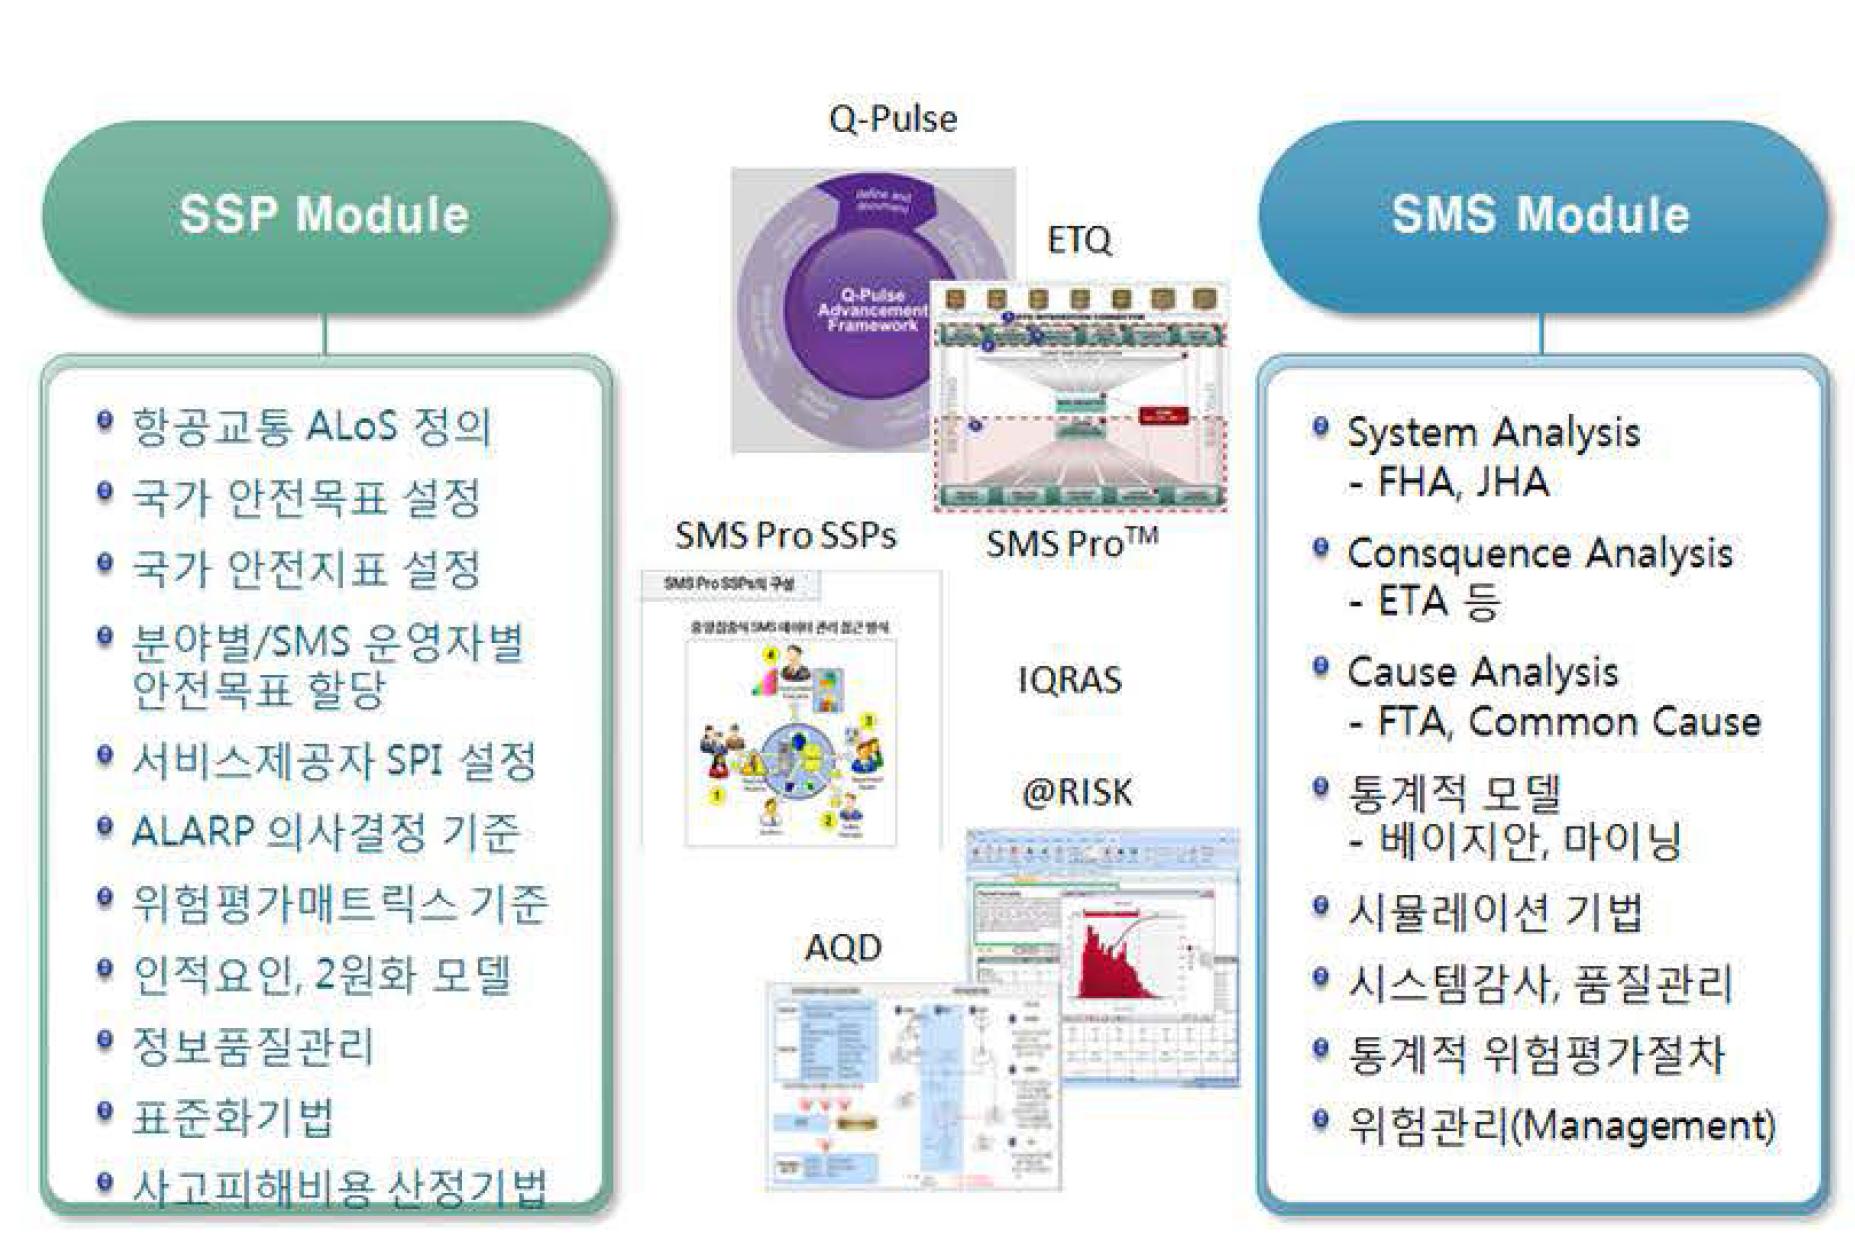 SSP 모듈과 SMS 모듈의 비교 특성